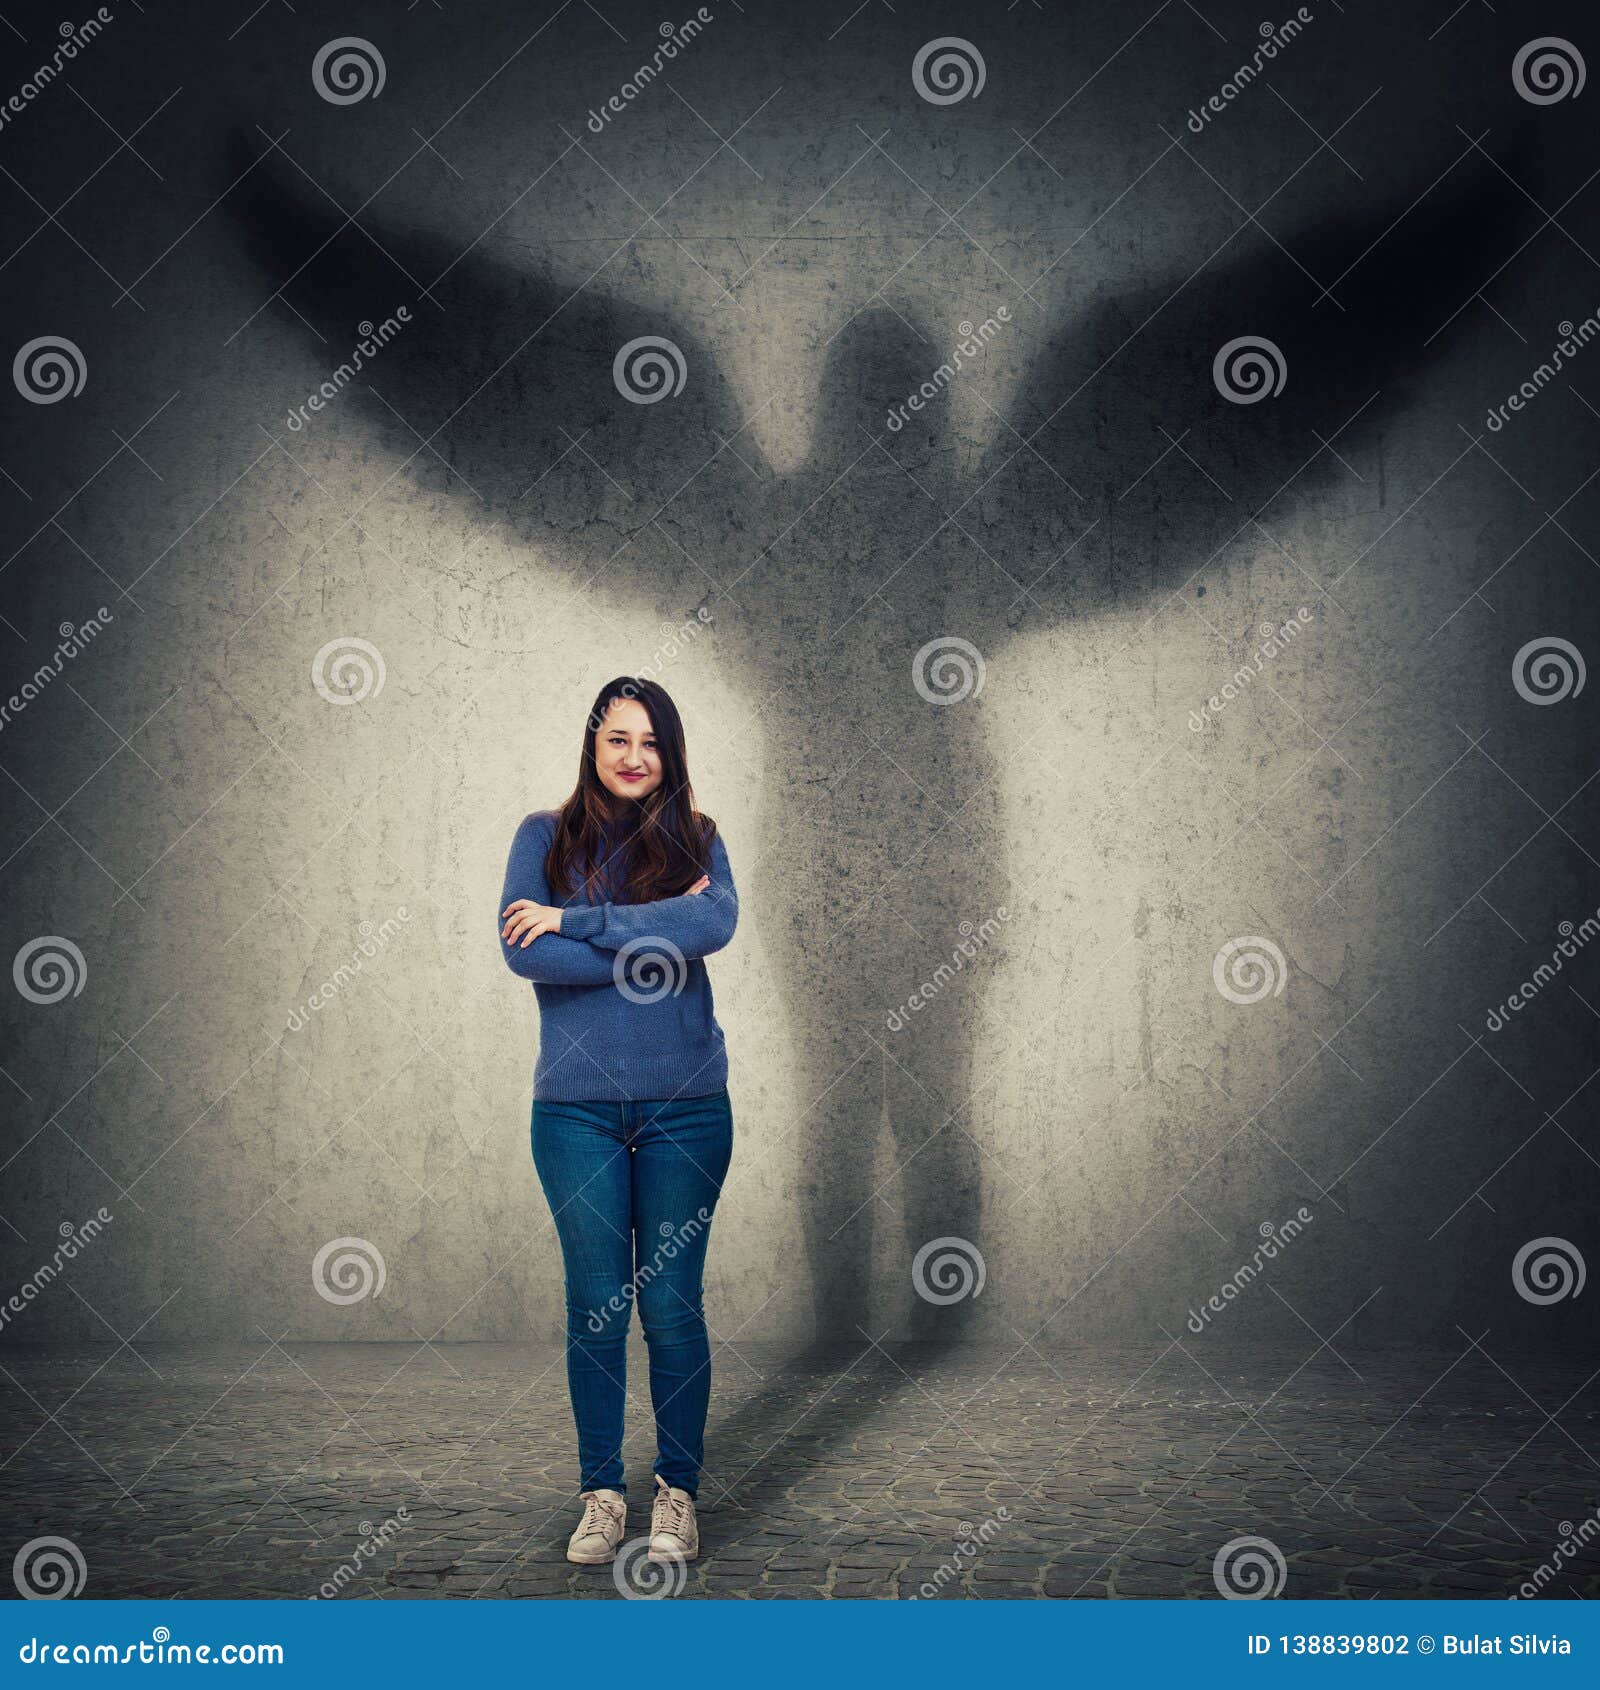 woman casting angel shadow